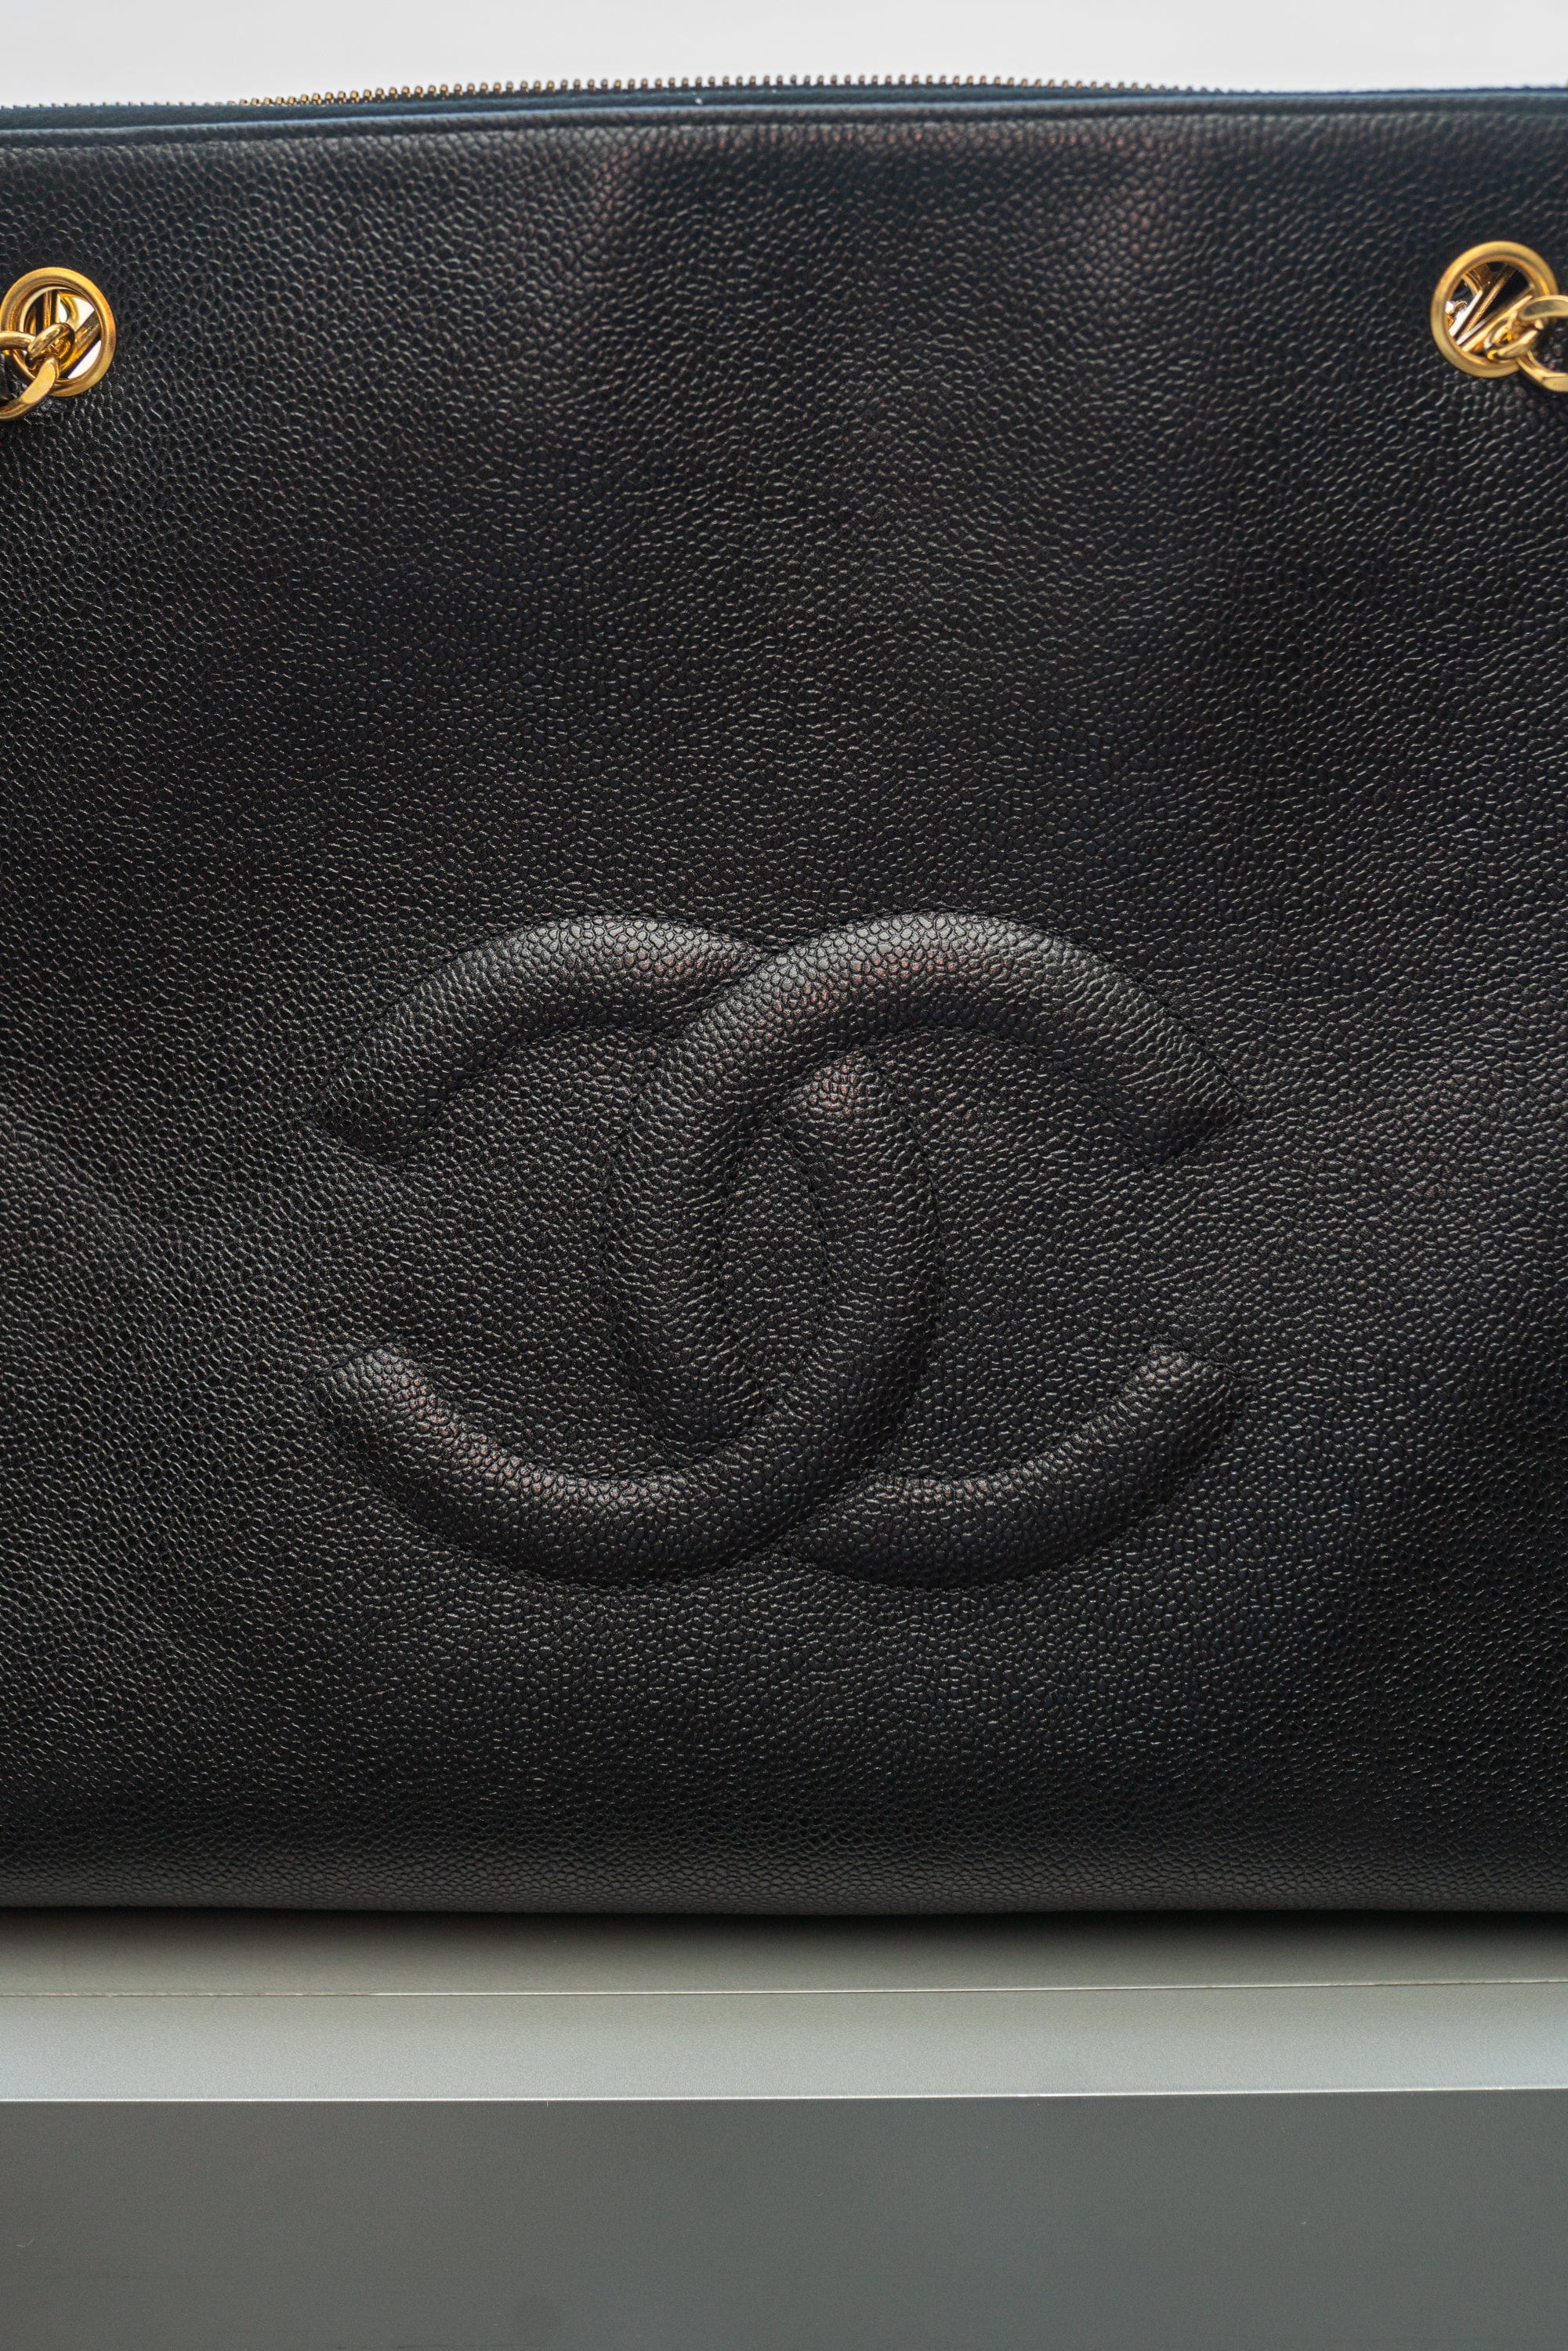 Chanel Chanel Chain Tote Coco Shoulder Bag PXL1157